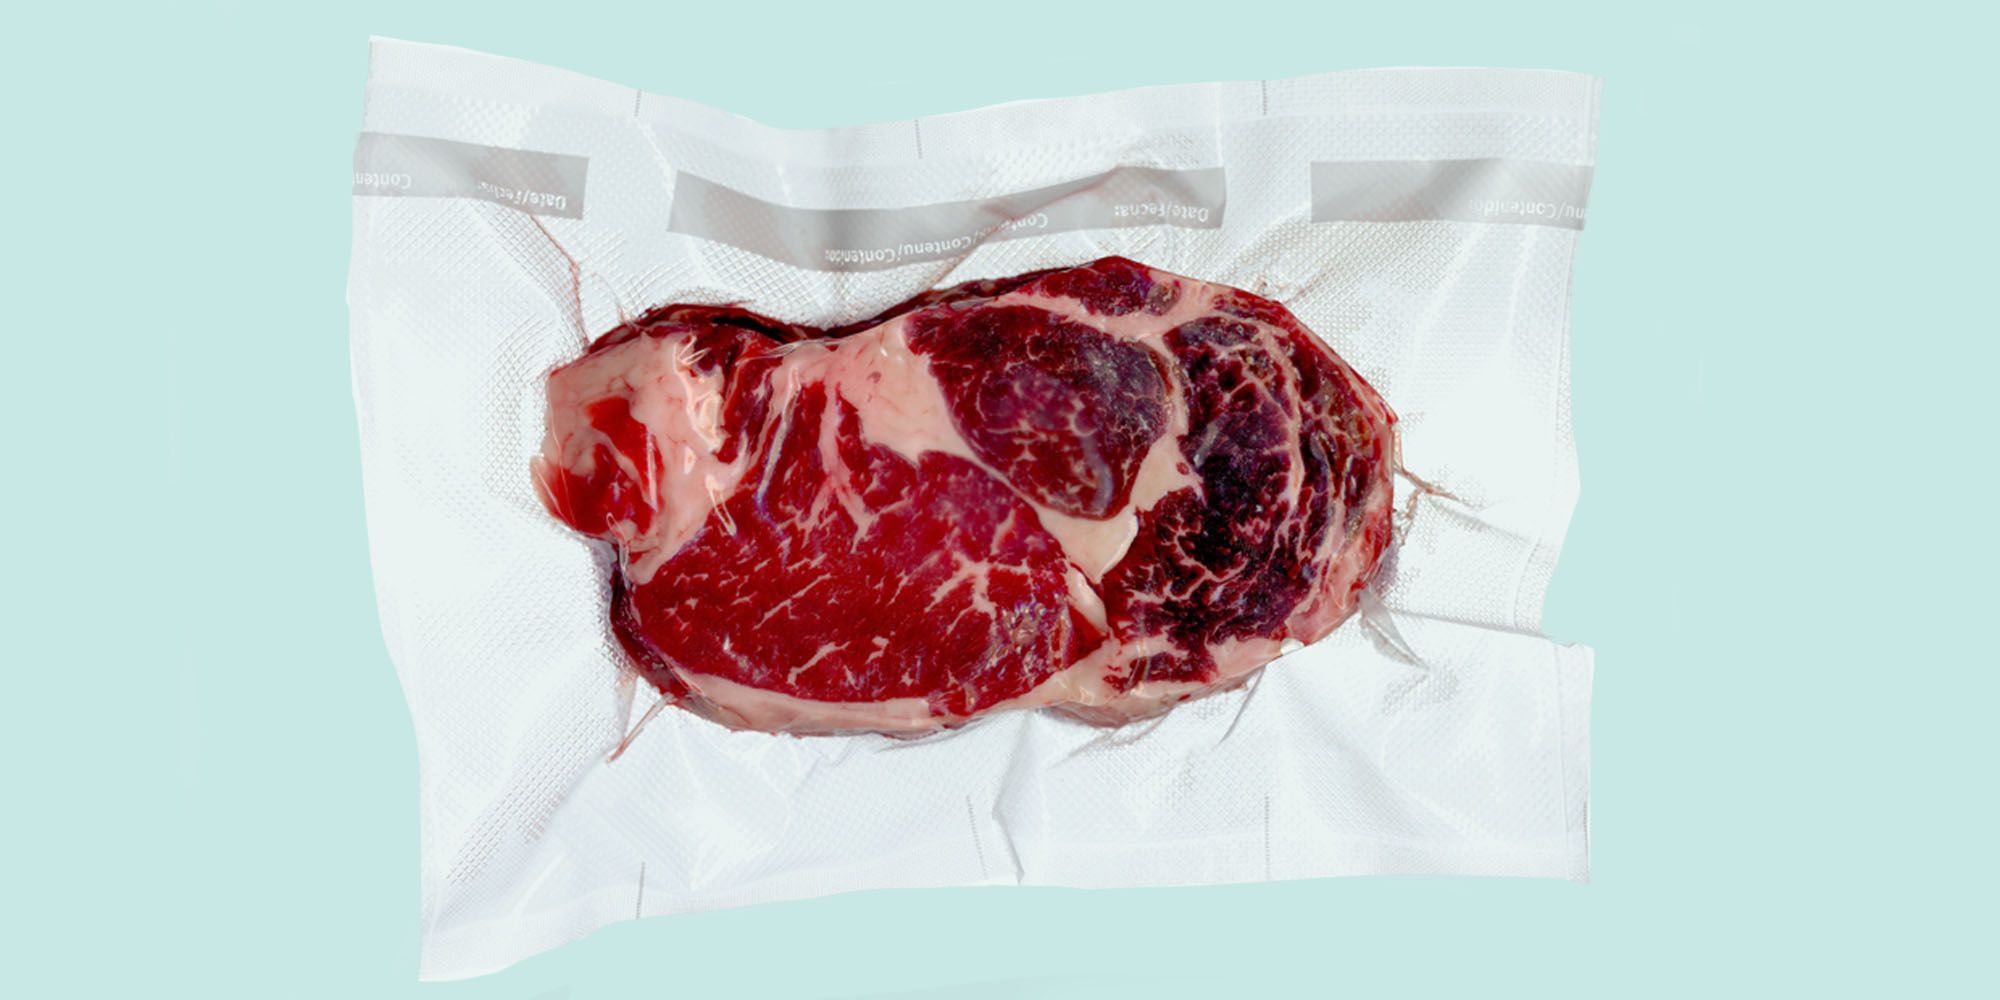 a raw steak on butcher paper